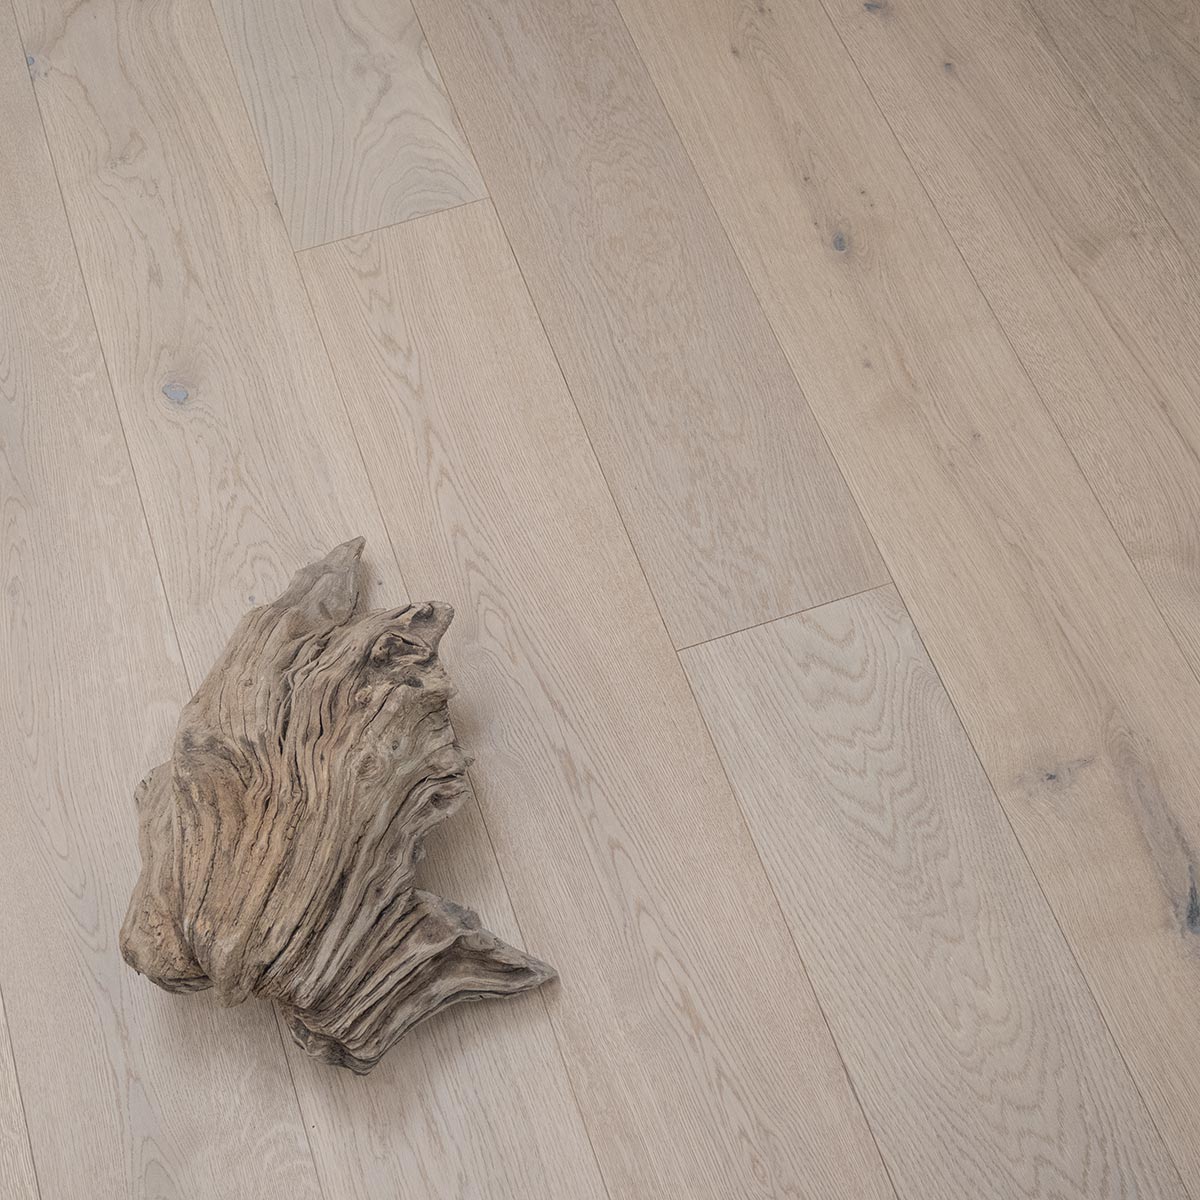 DC204 Shore Drift Oak - Brushed European Rustic Wood Floor